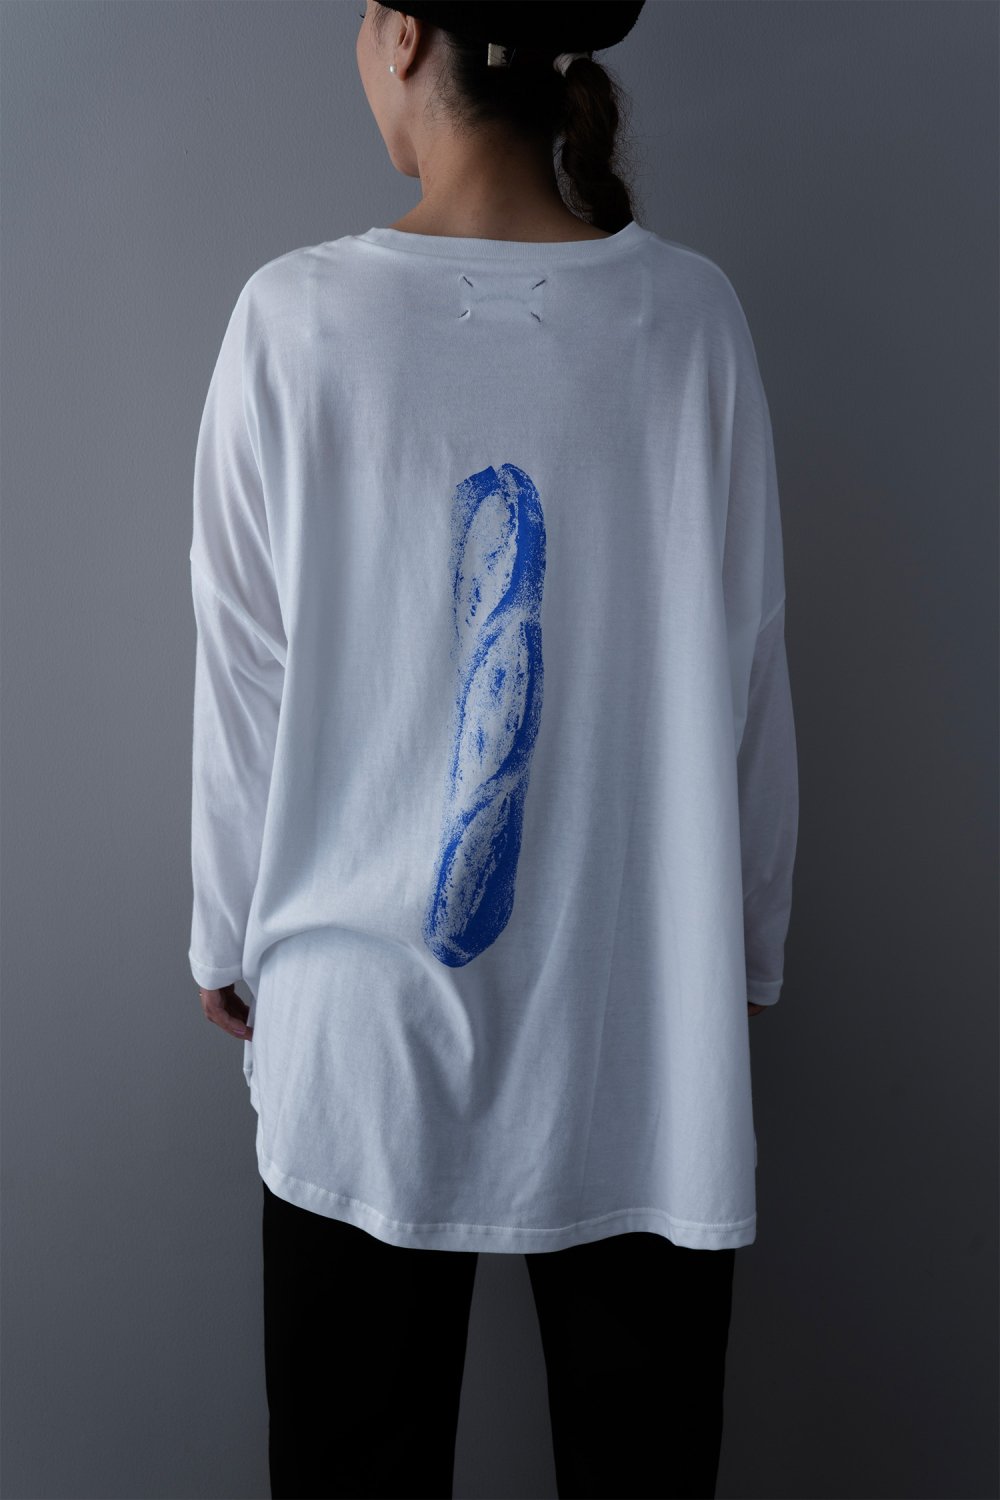 michirico Baguette T-shirt ( White )